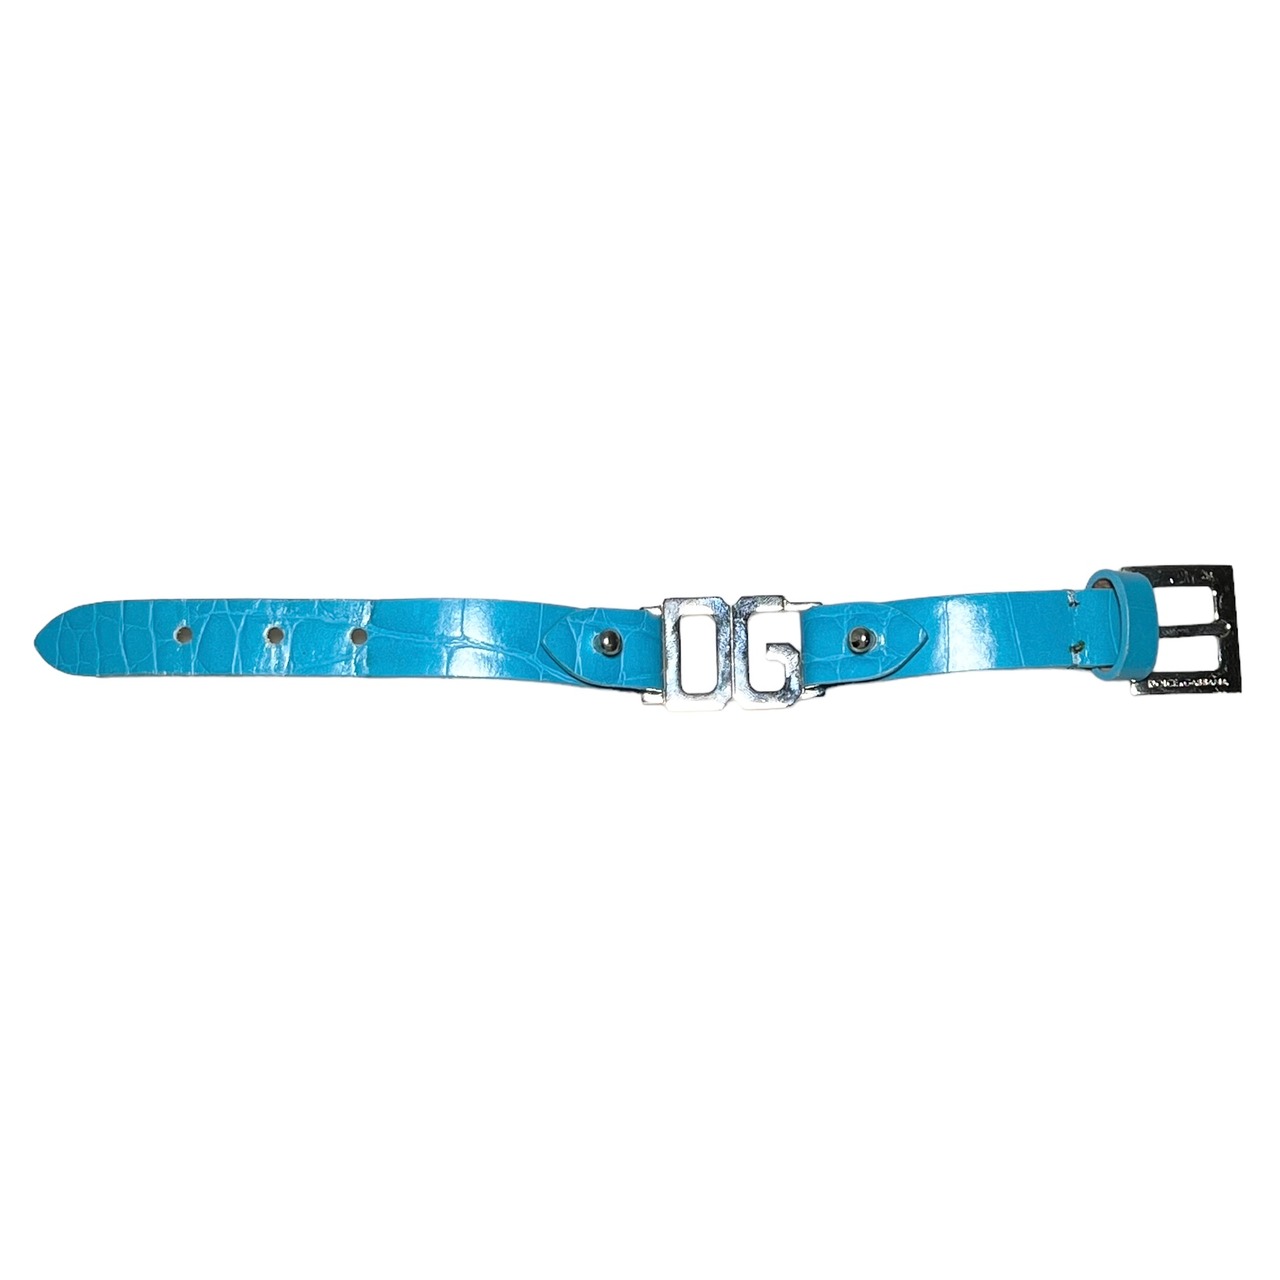 DOLCE&GABBANA turquoise color leather × metal logo bracelet